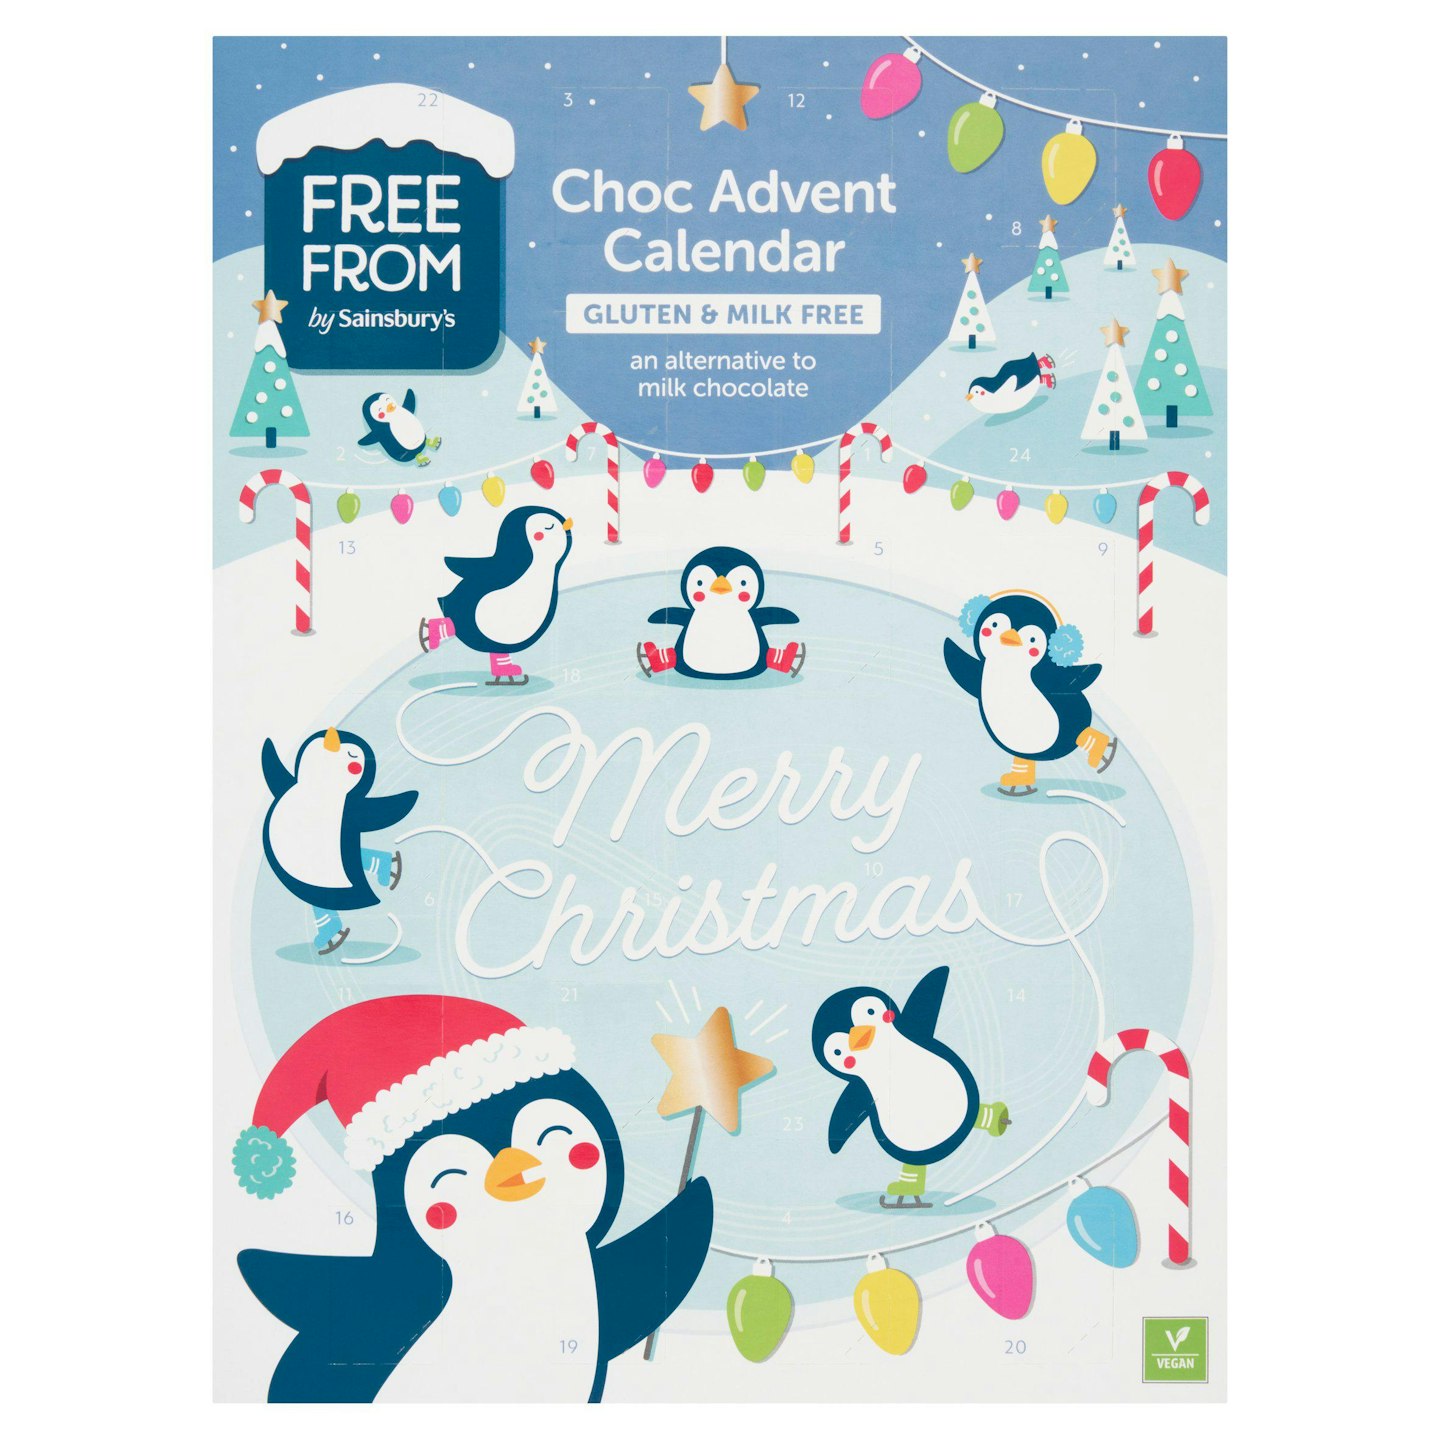 Sainsbury's Free From Choc Advent Calendar